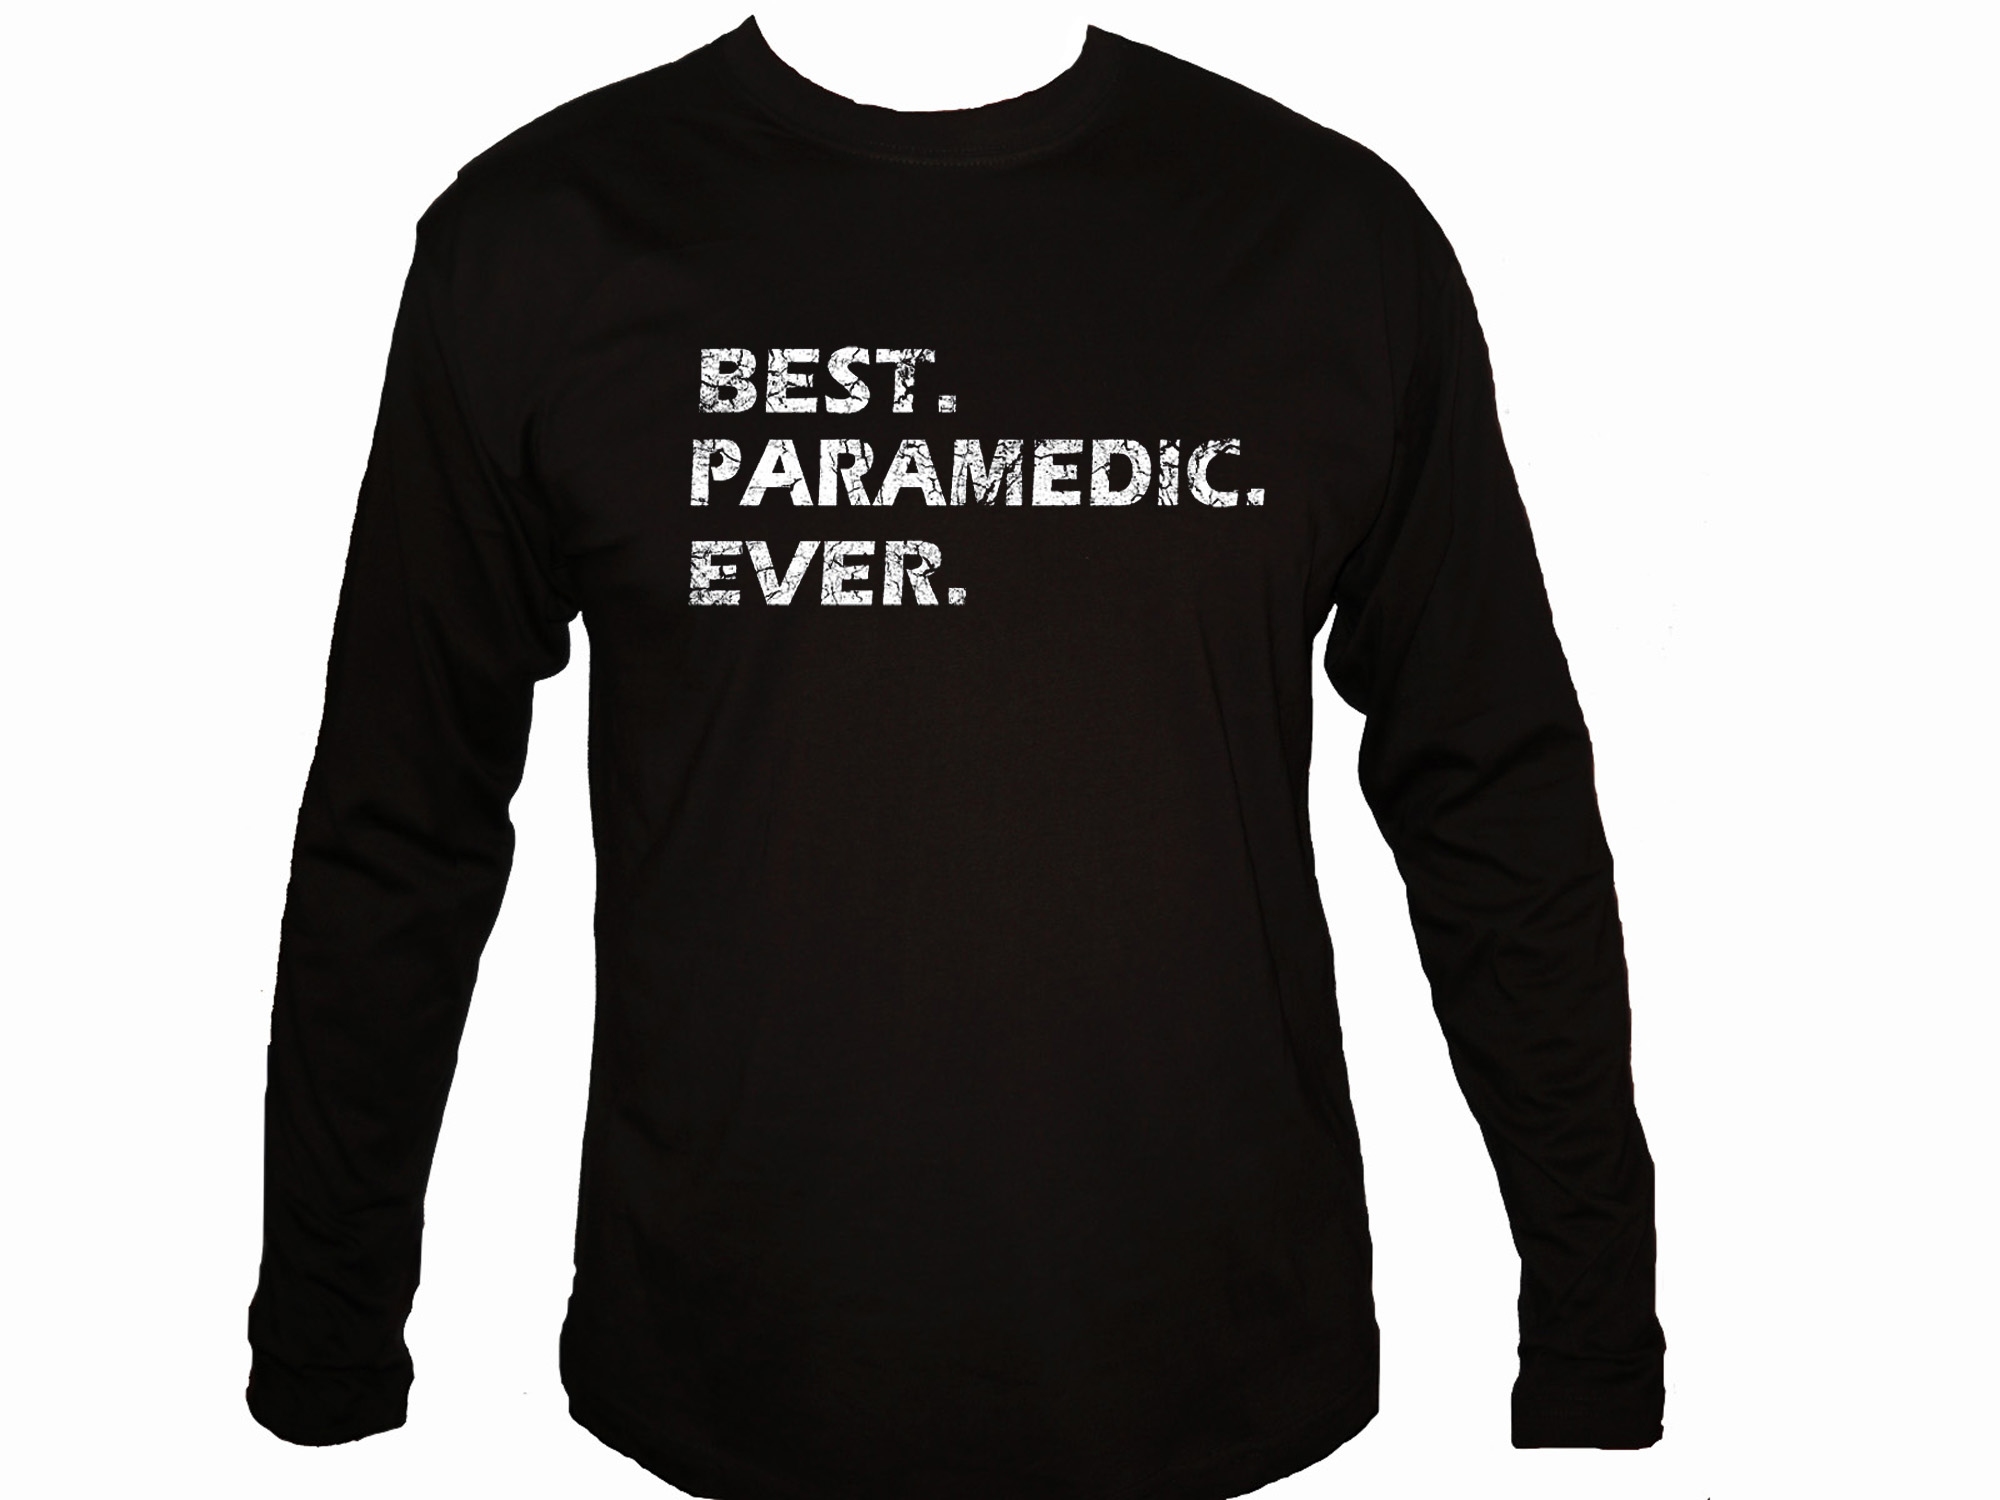 Best paramedic ever distressed print sleeved black t-shirt